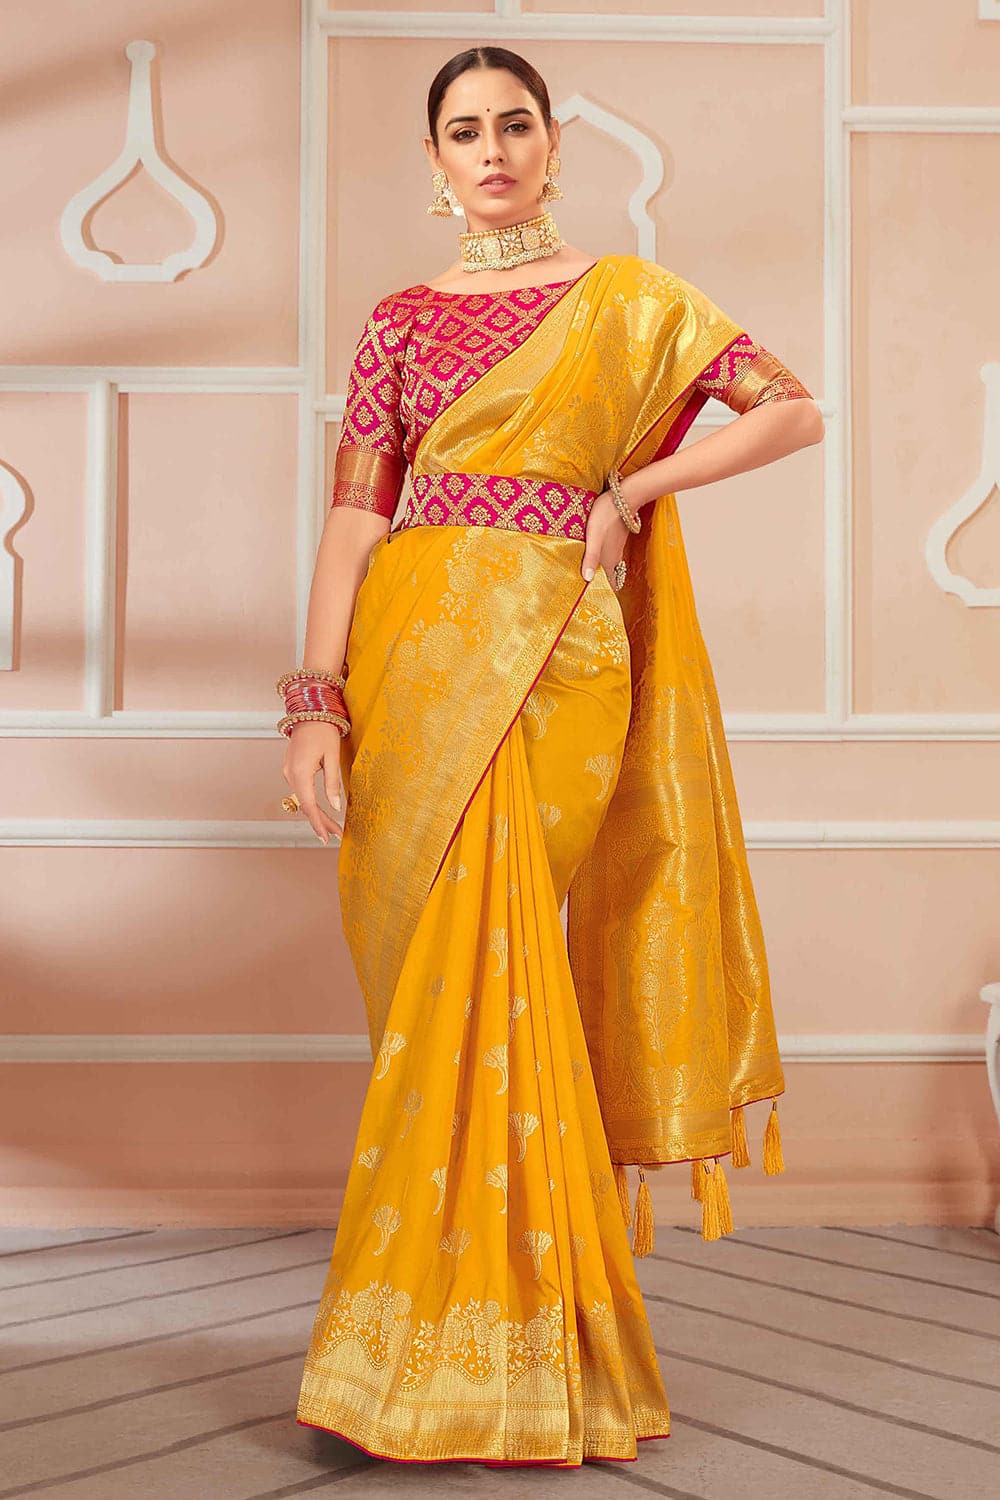 Aggregate more than 150 yellow and red banarasi saree best